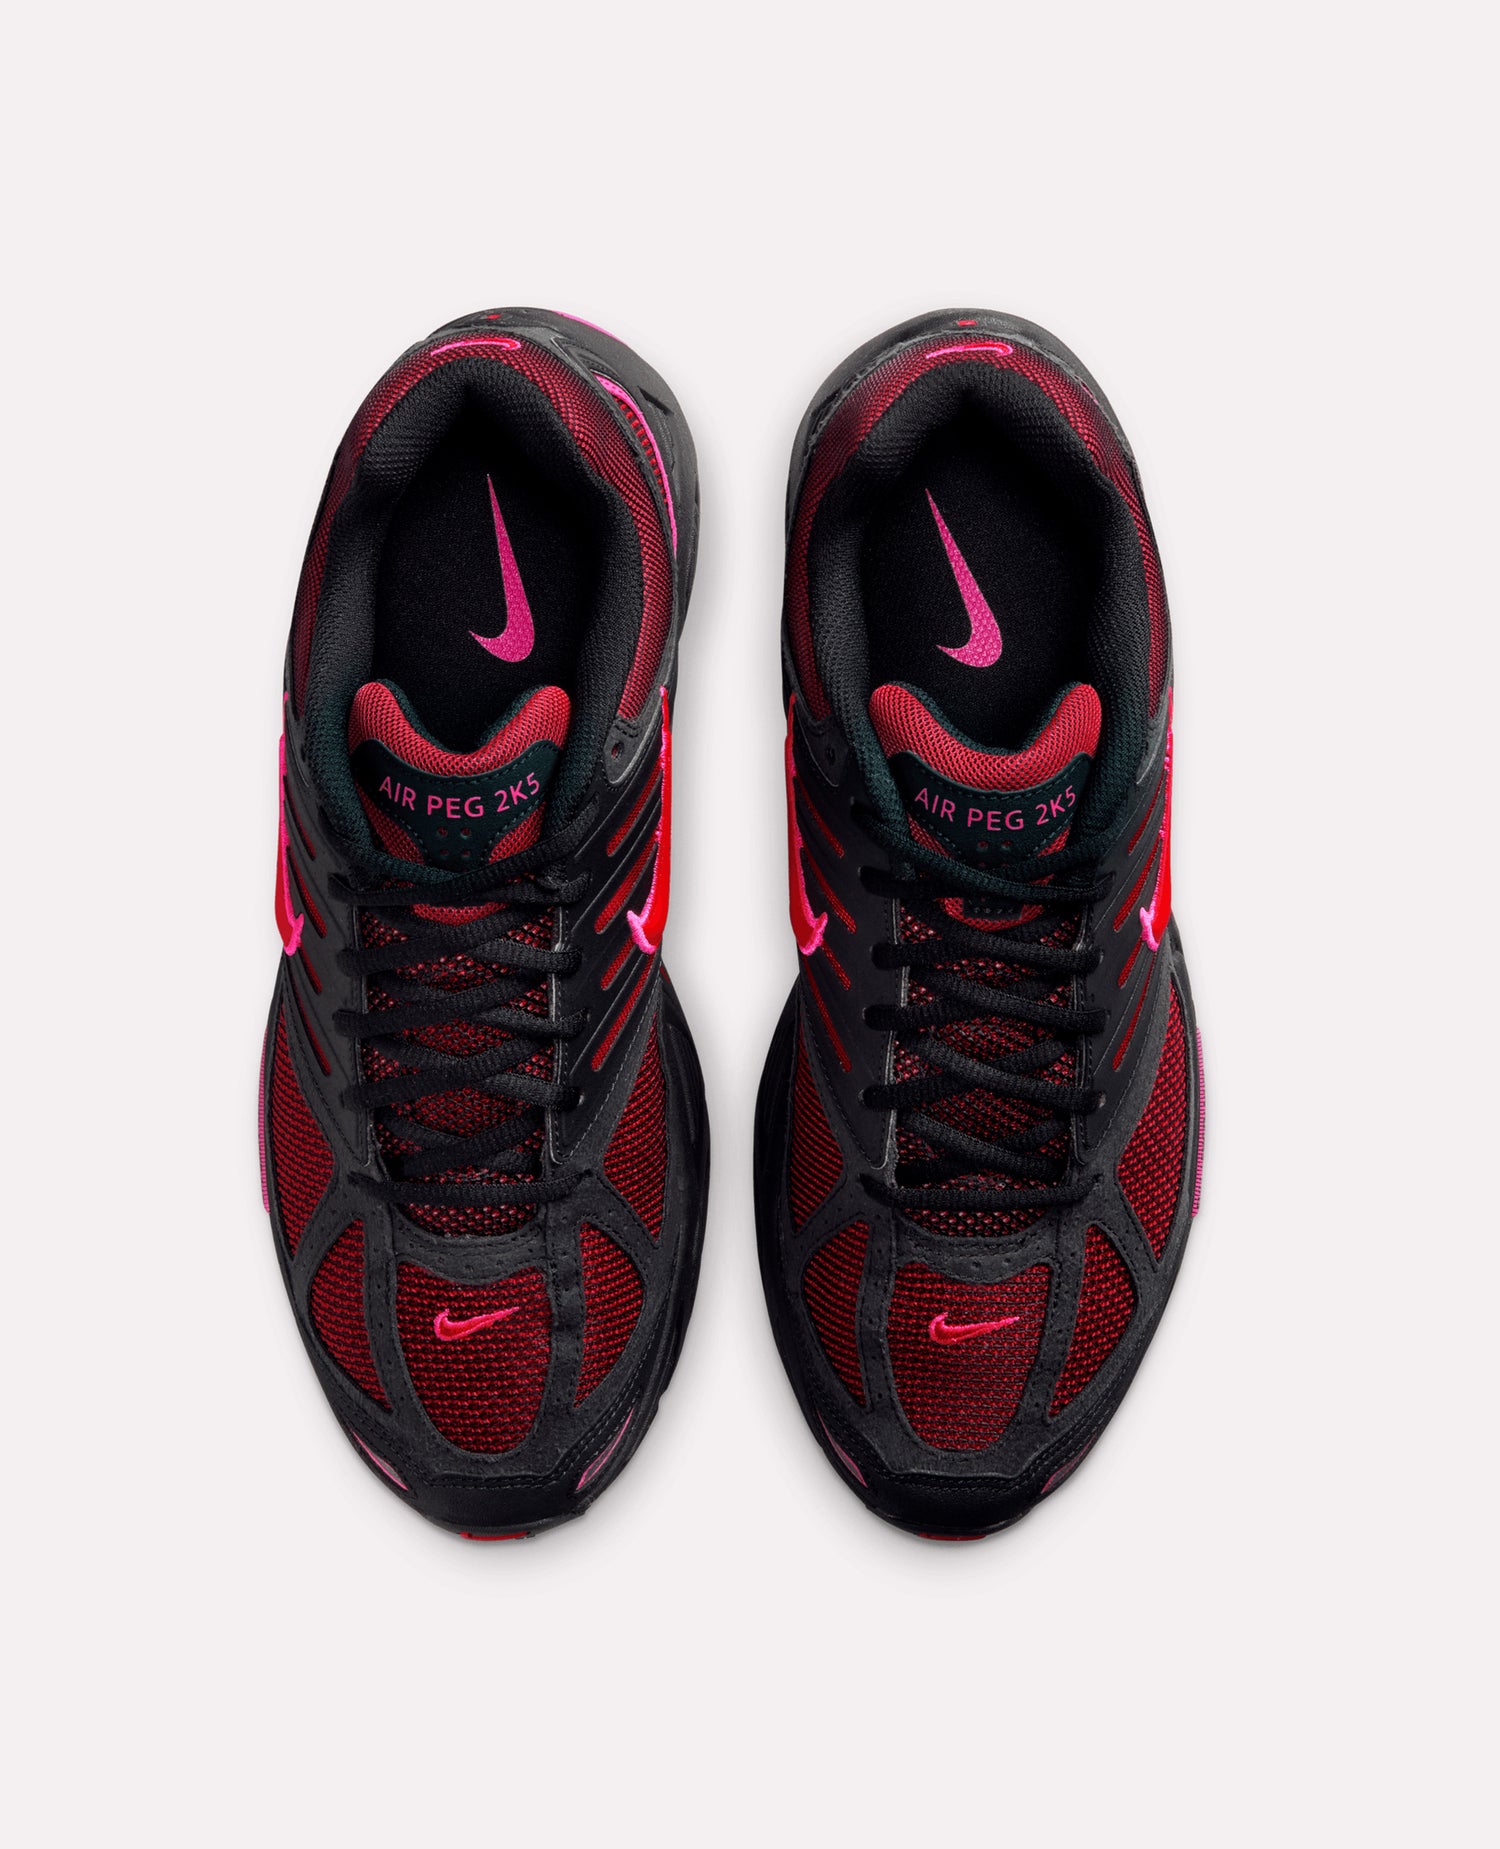 Nike Air Peg 2K5 (Noir/Rouge Feu-Rose Fierce)